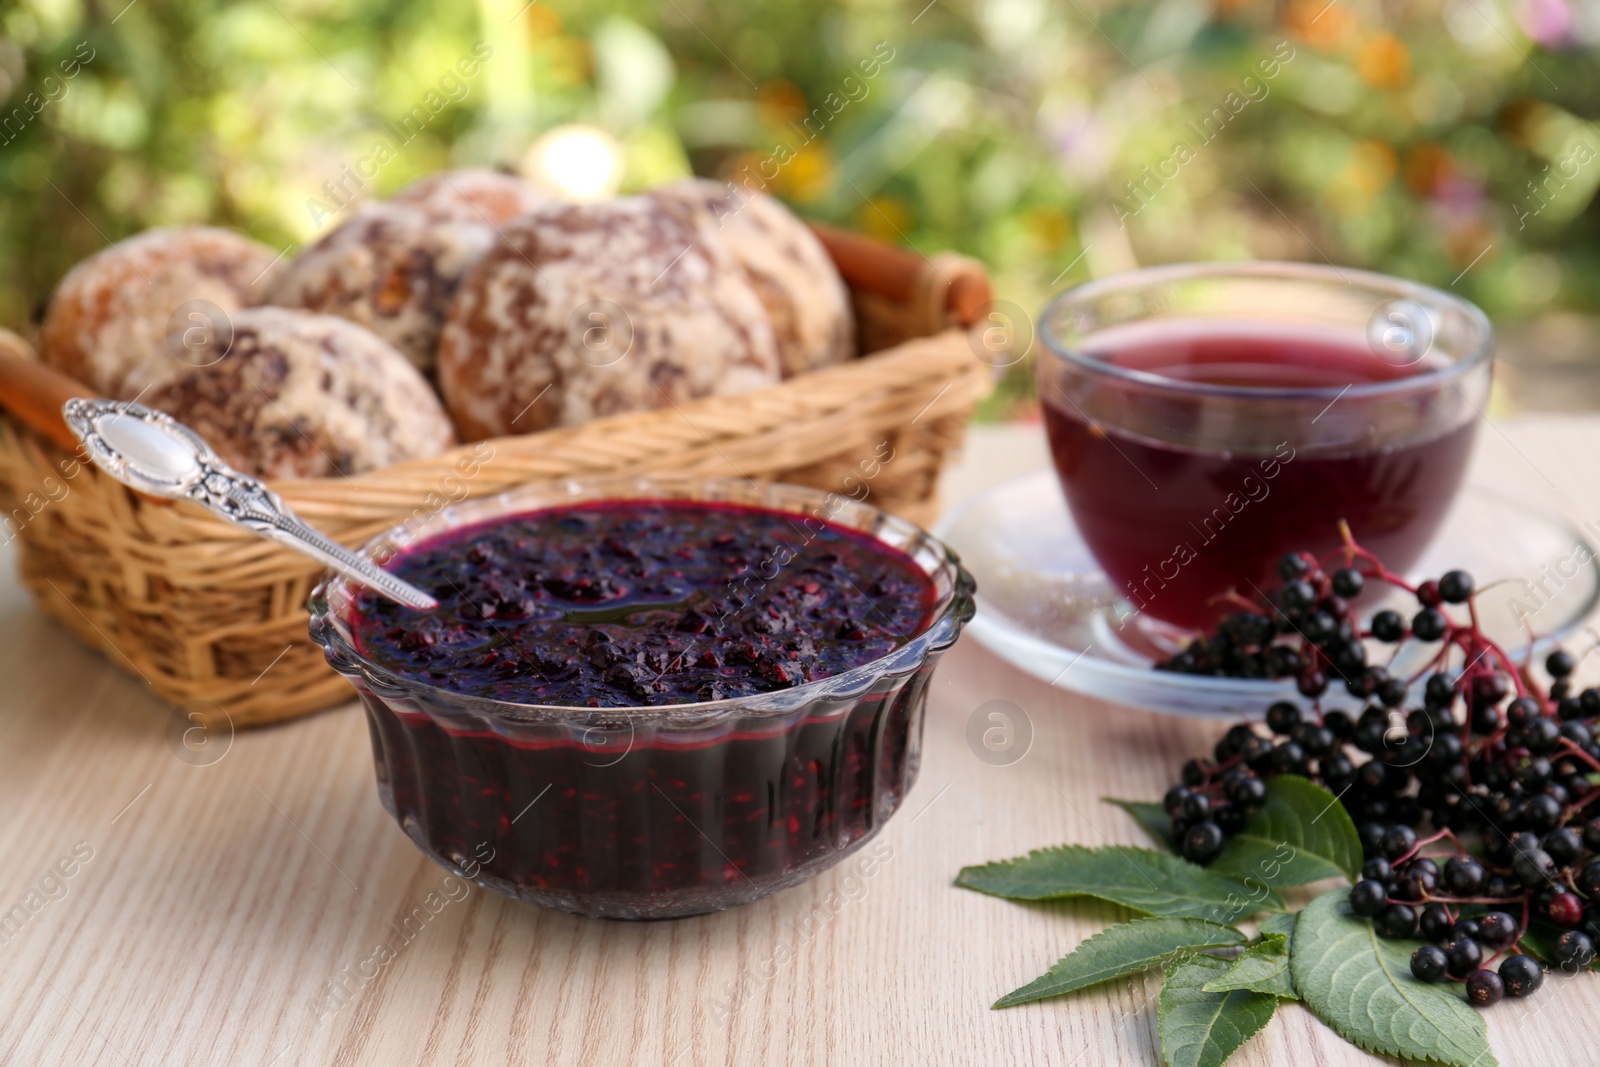 Photo of Elderberry jam, glass cup of tea, tasty cookies and Sambucus berries on wooden table outdoors